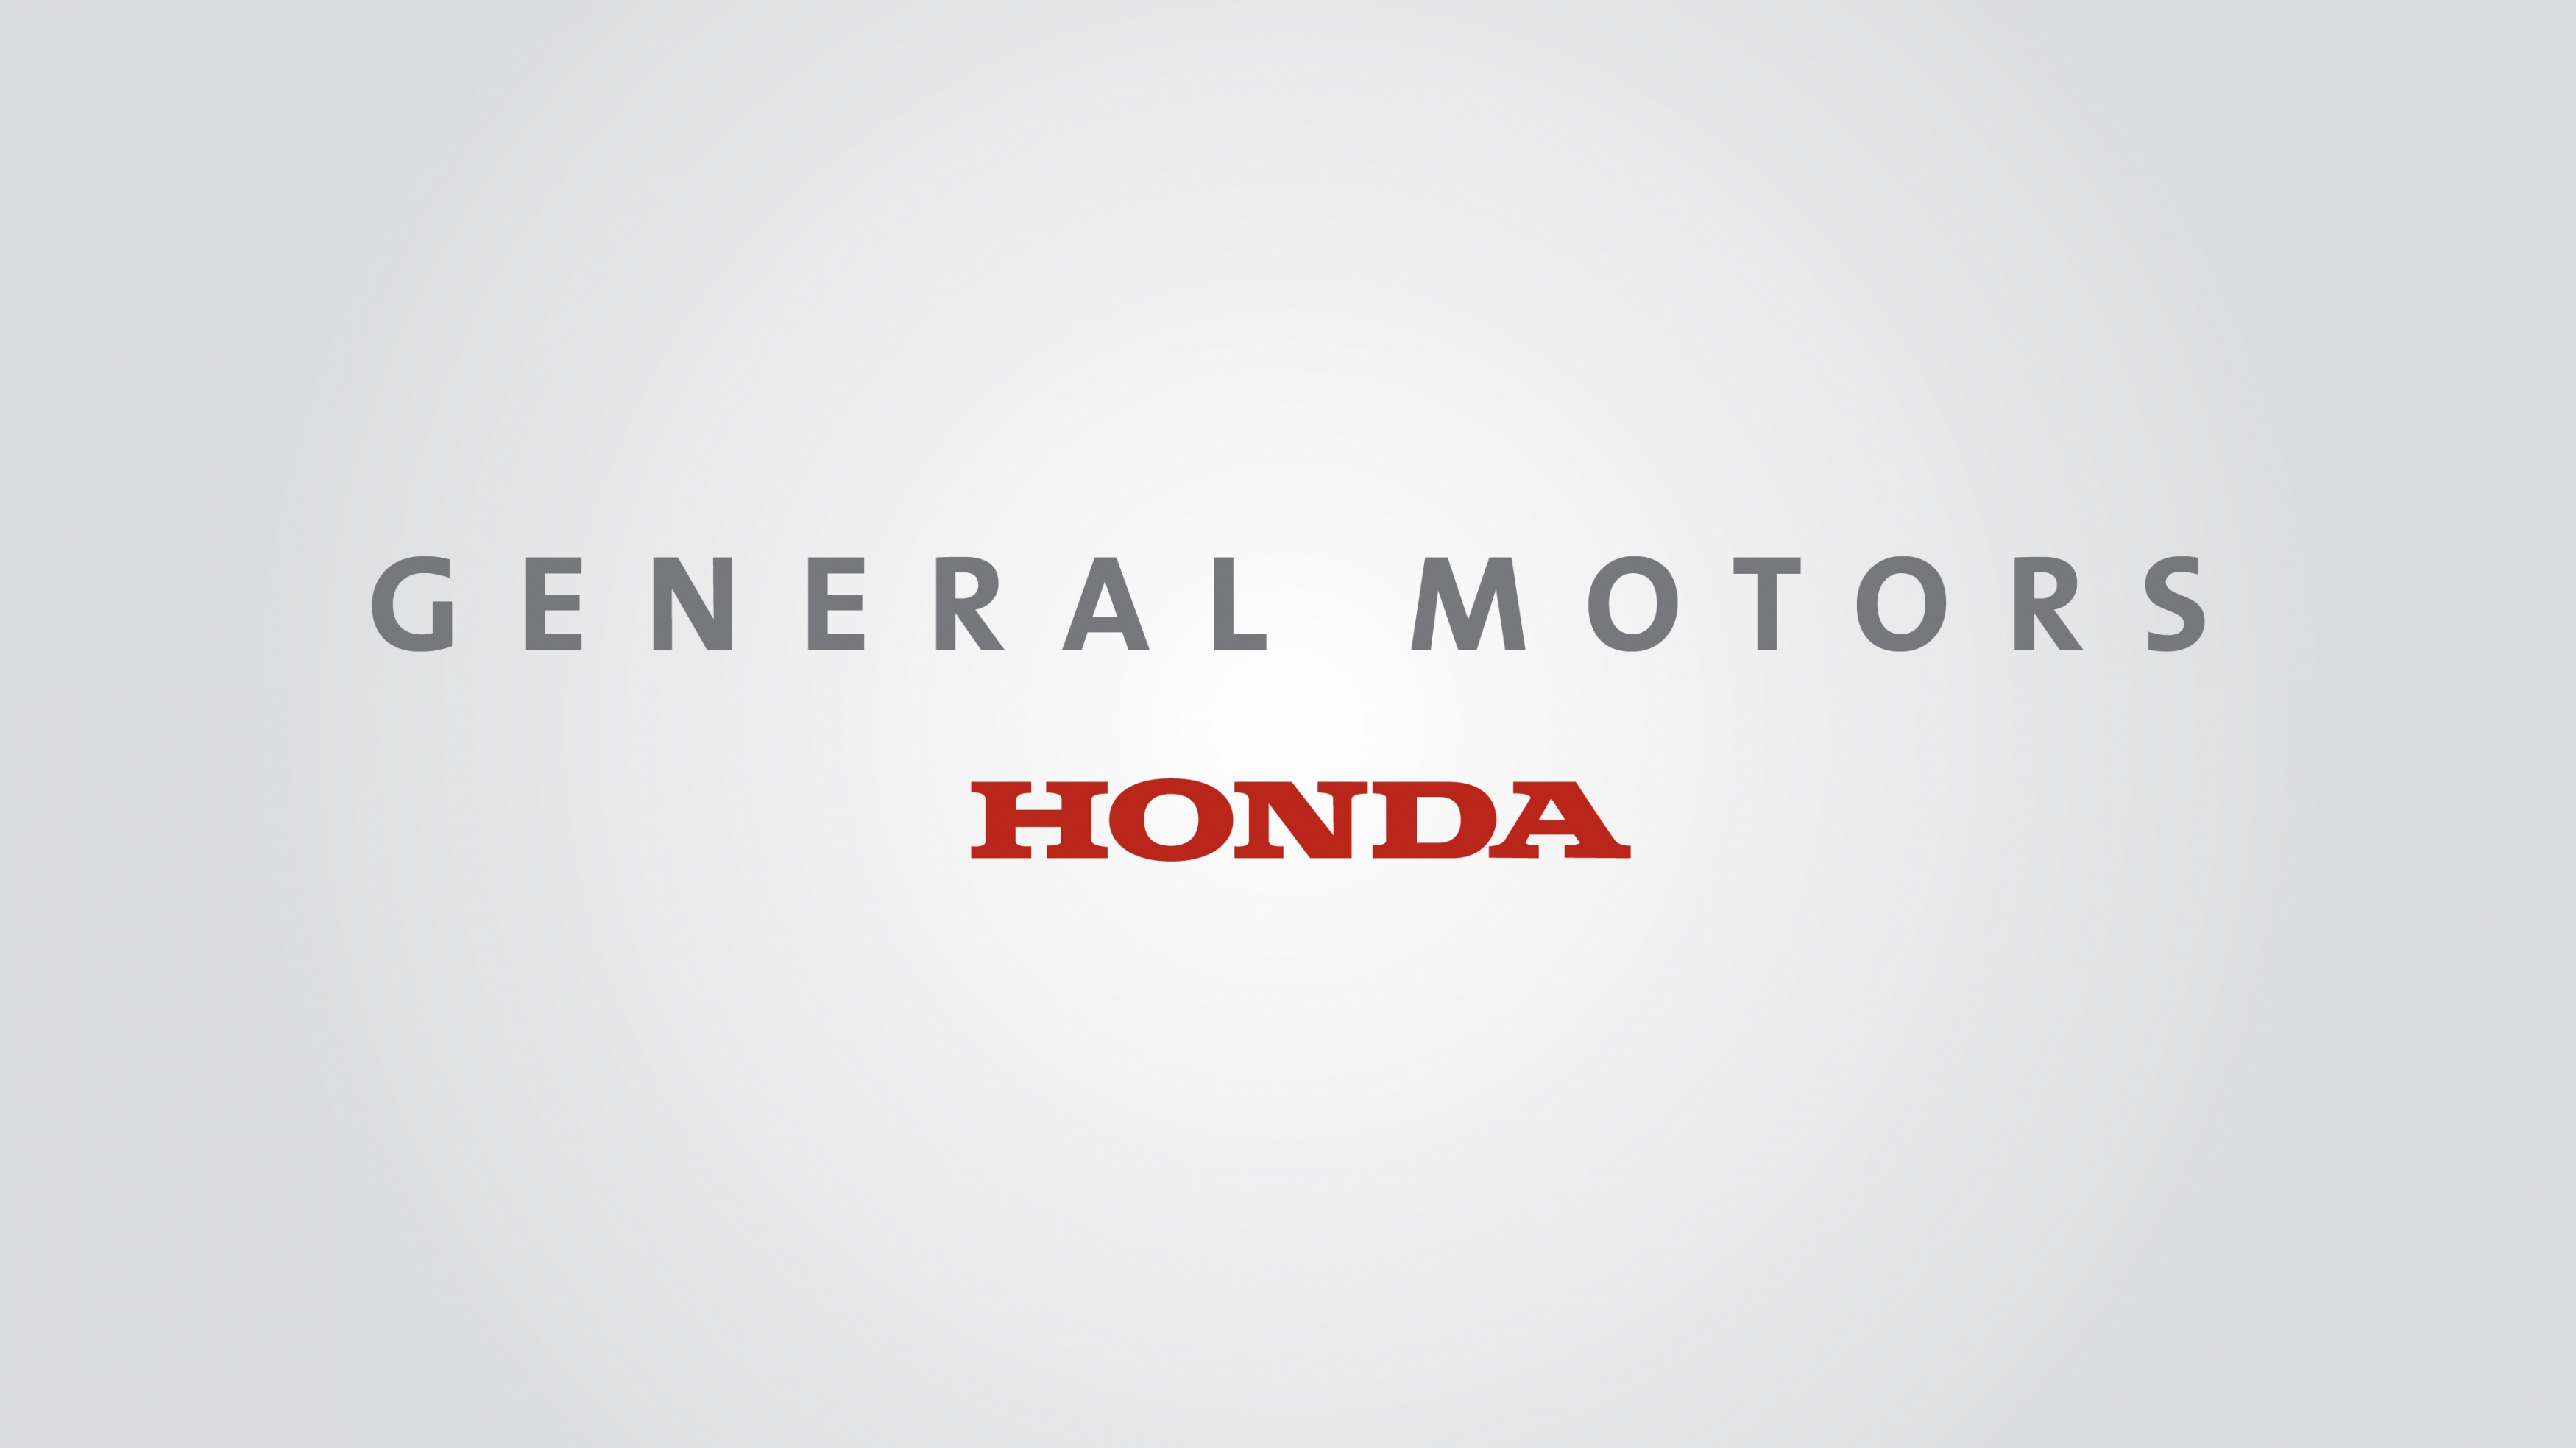 Honda and General Motors Pursuing North American Vehicle Alliance